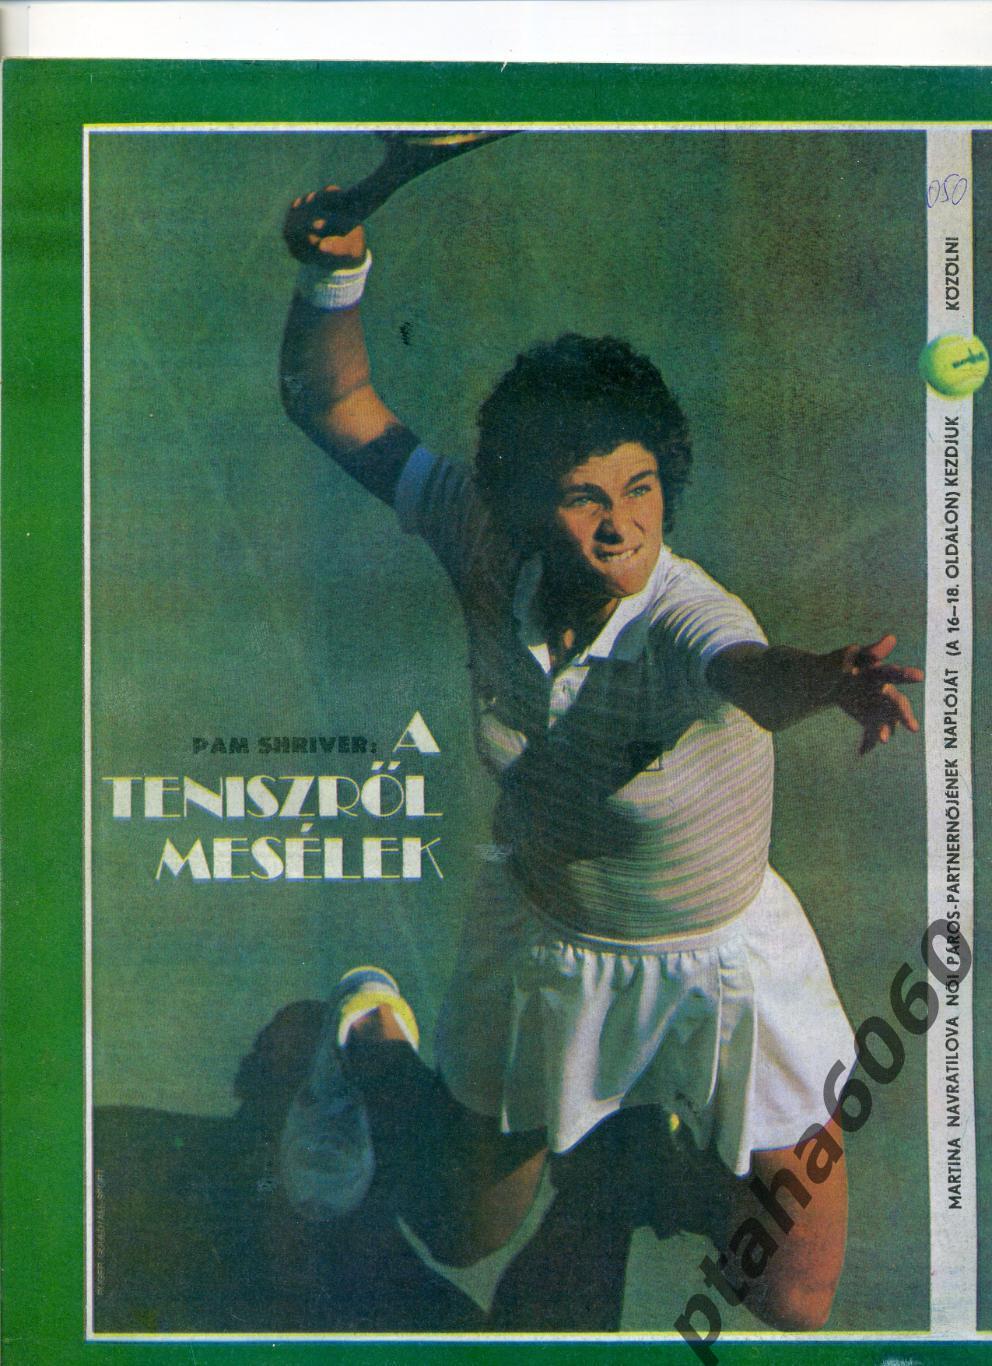 КЕПЕШ СПОРТ-Спортивный журнал Венгрия- №9 1986г 1